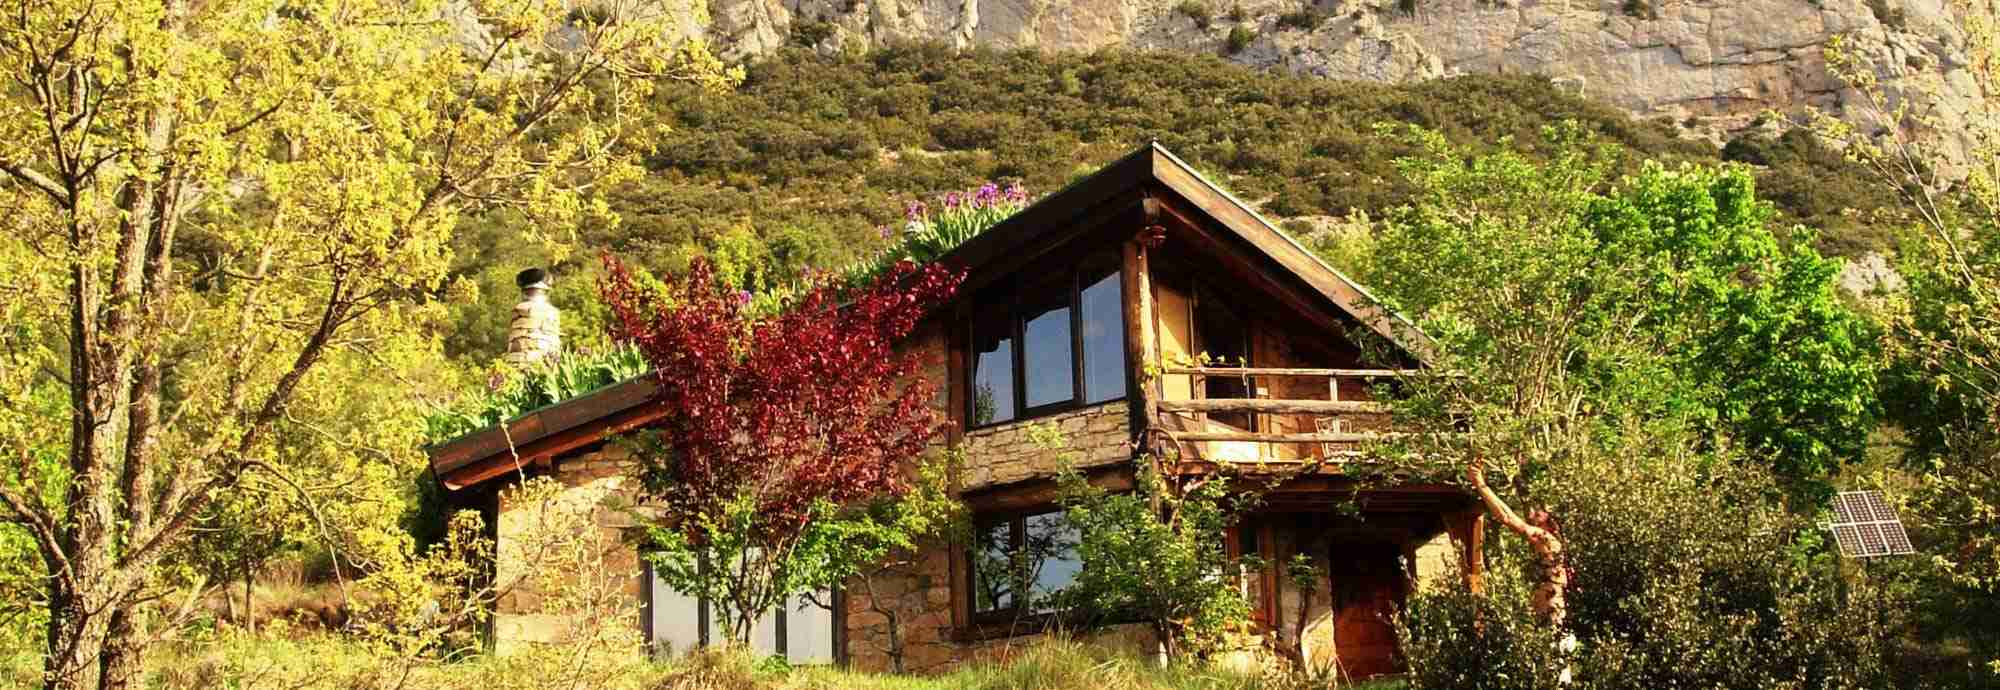 Eco holiday mountain retreat in Pyrenees, Catalonia, Spain